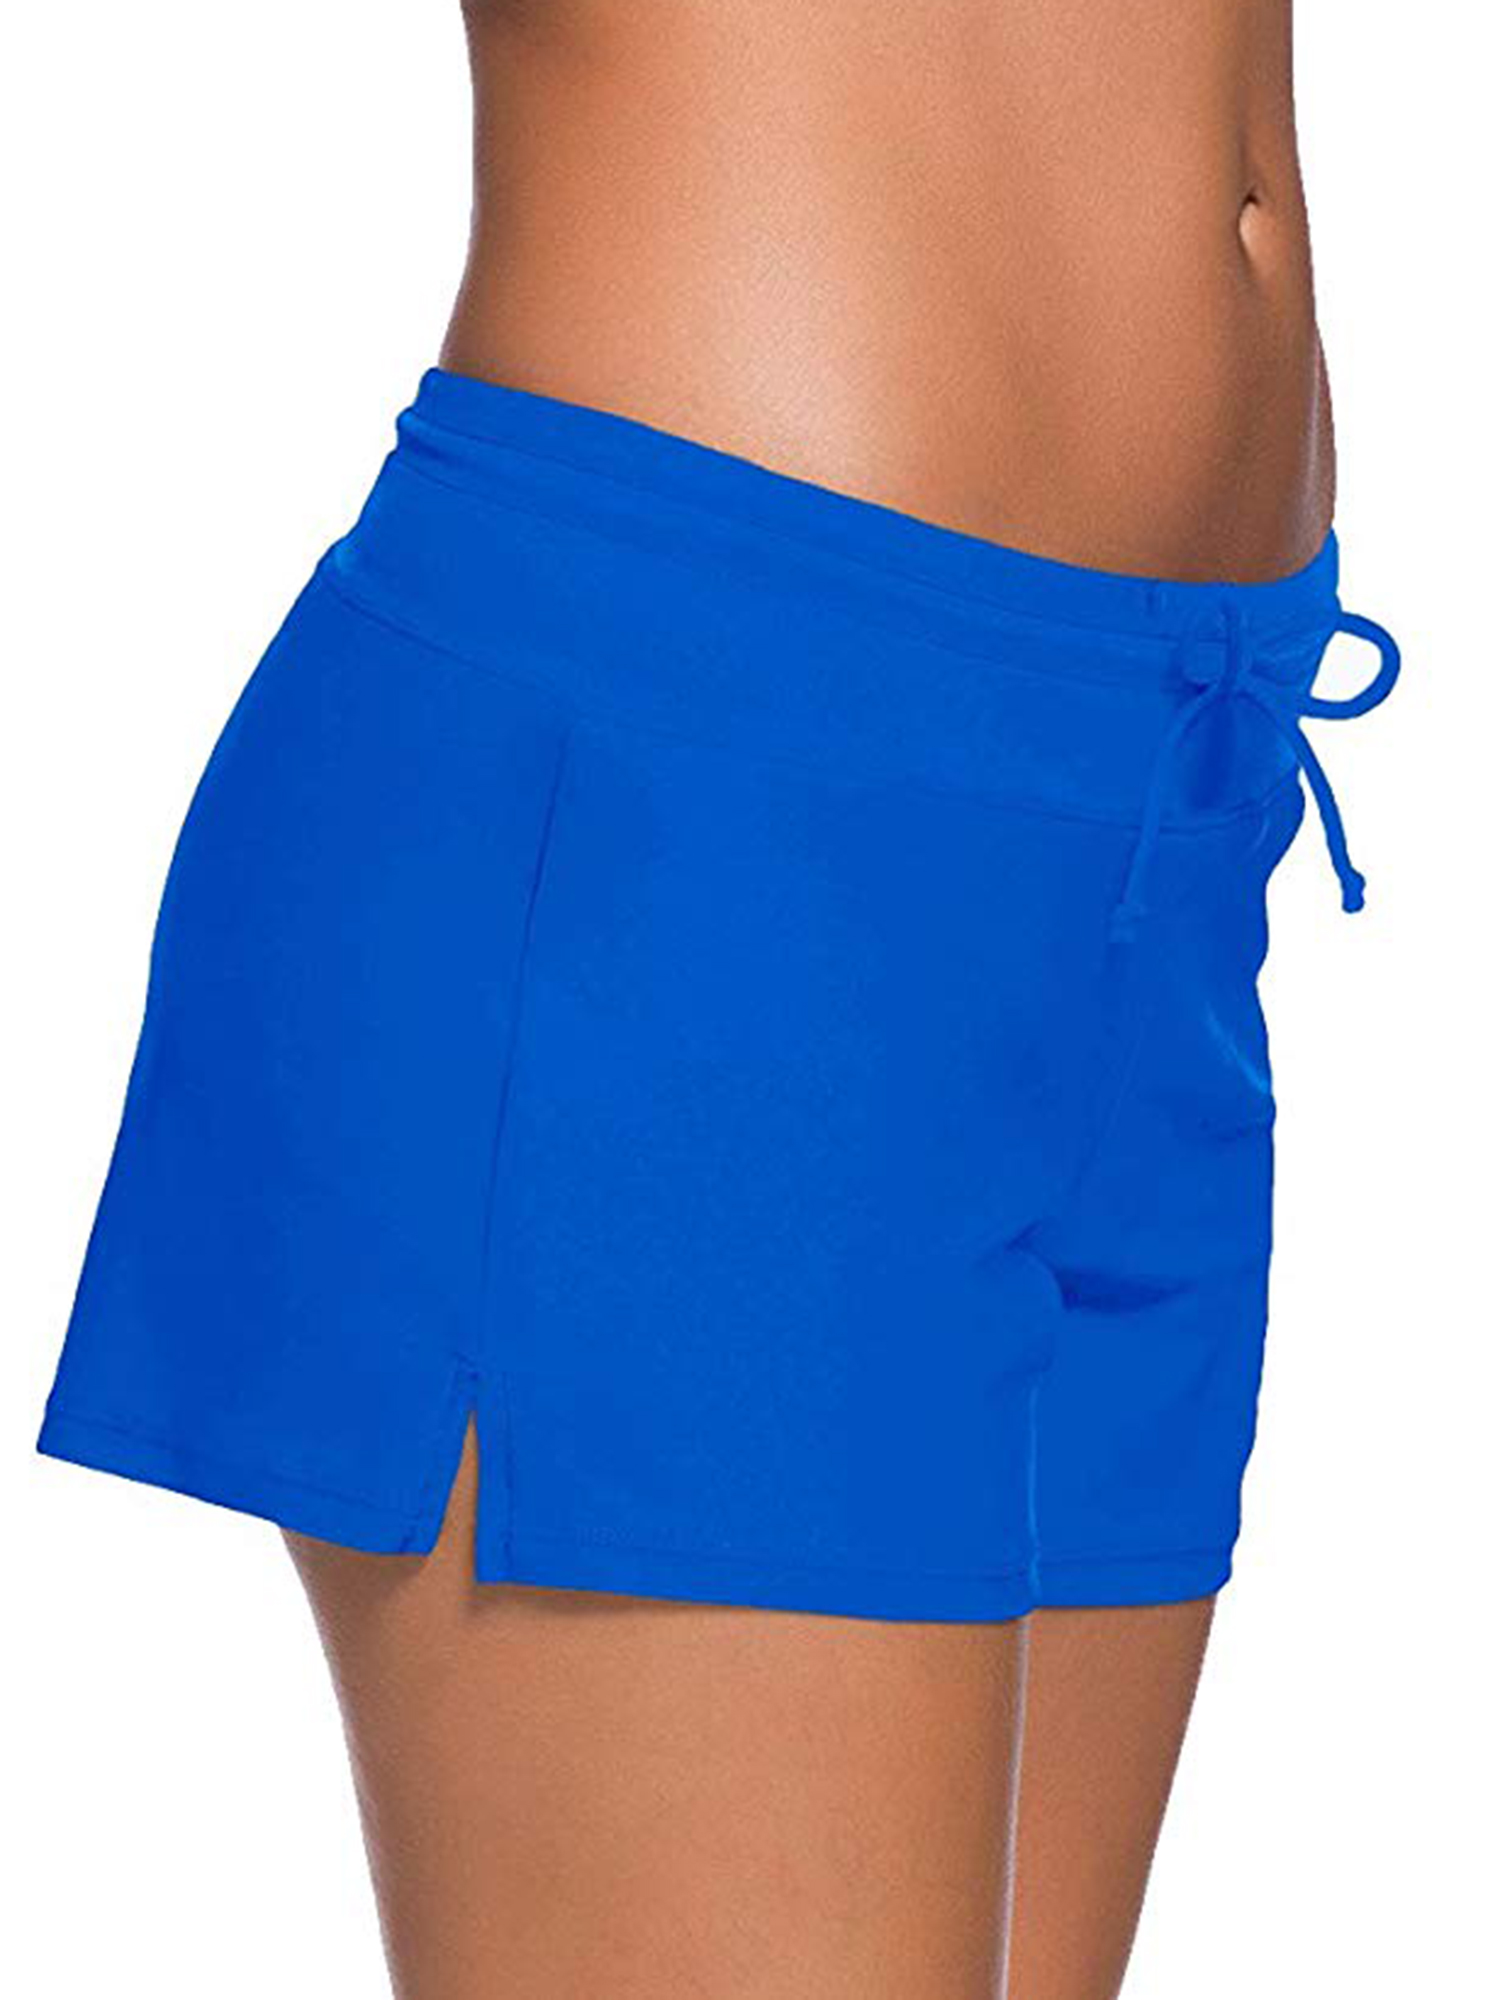 SAYFUT Women's Fashion Adjustable Waistband Swimsuit Bottom Boy Shorts ...